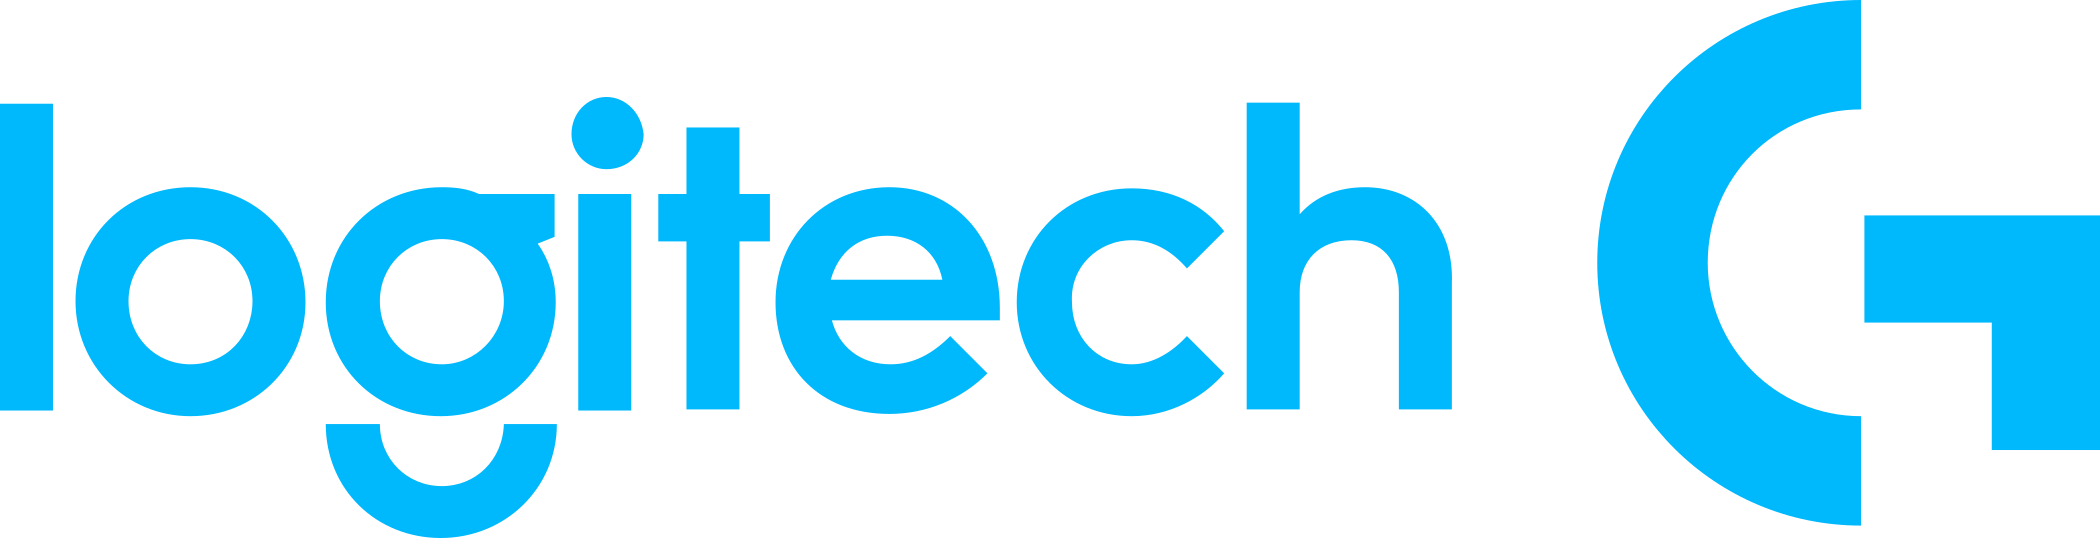 logitech logo 5 - Logitech Logo